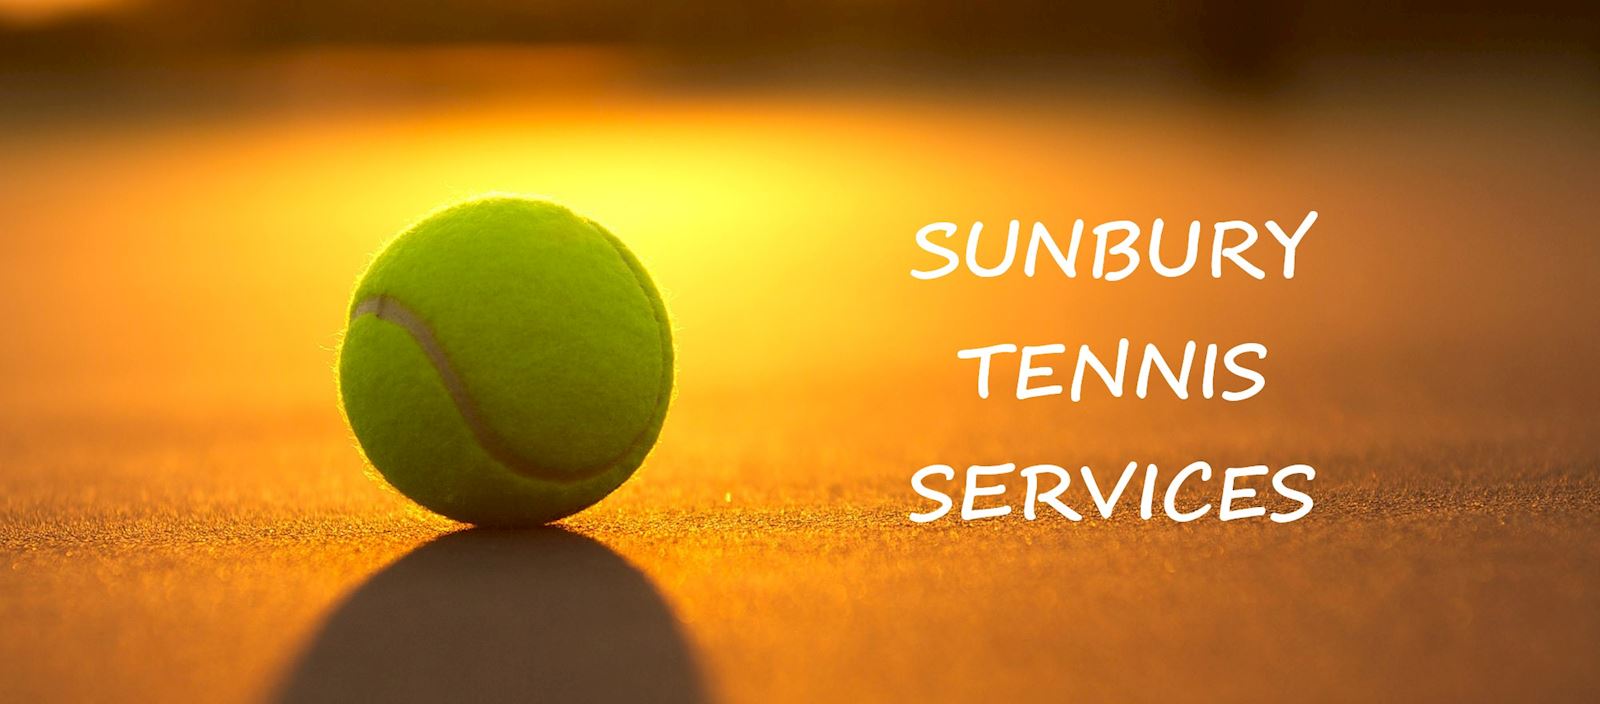 Sunbury Tennis Services